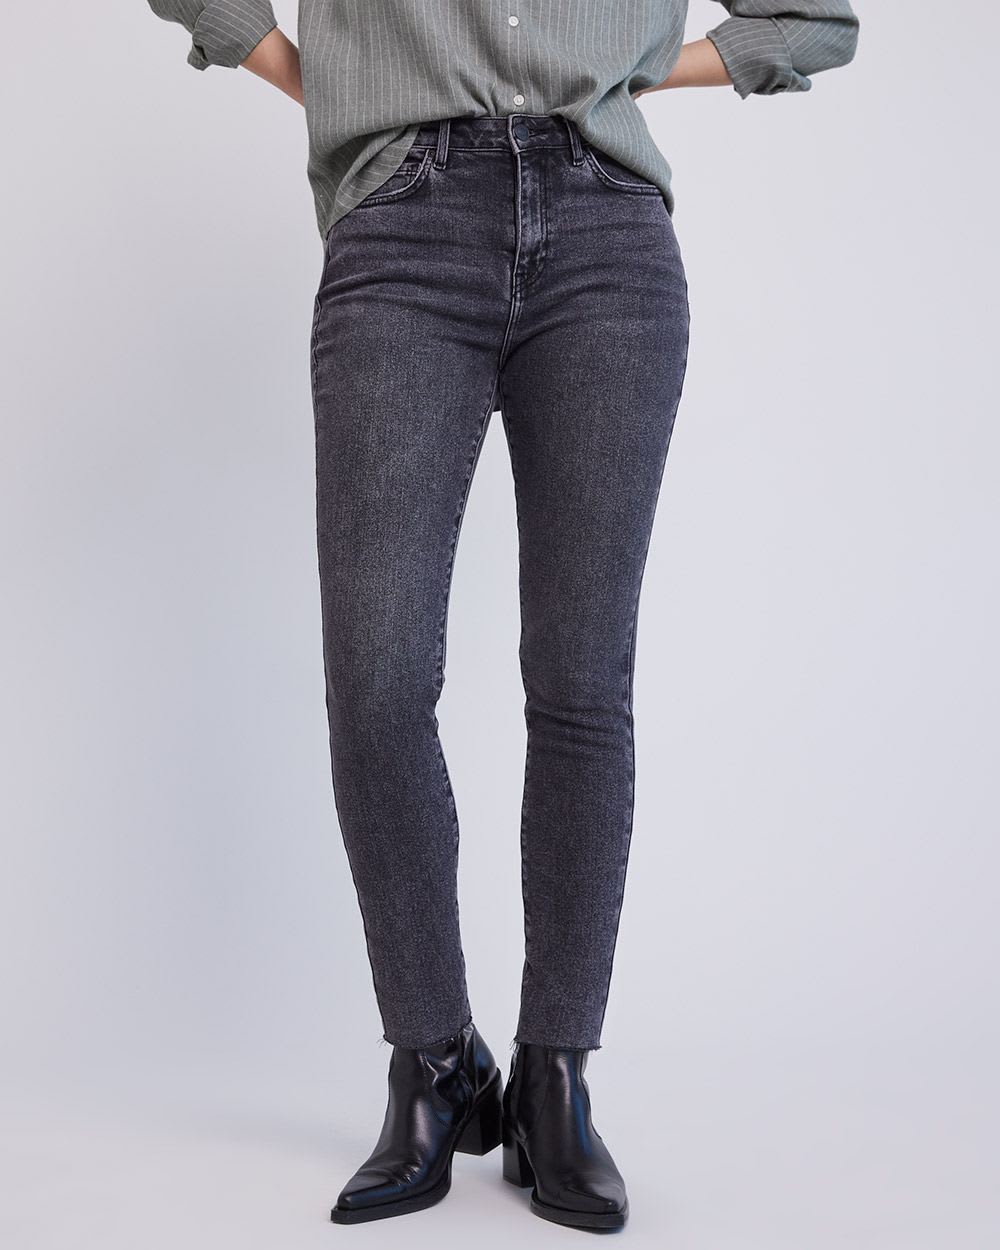 Grey High-Waisted Skinny Jeans